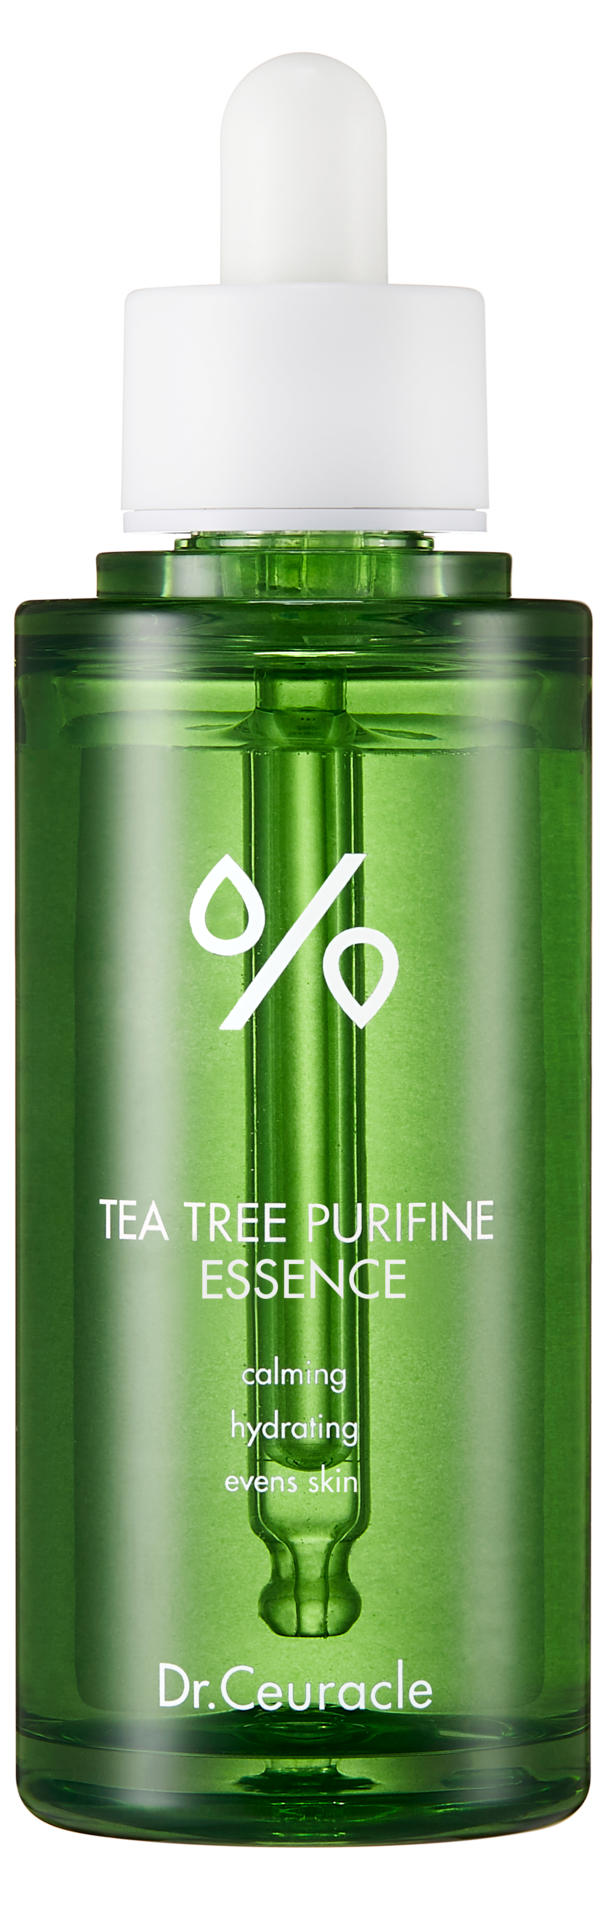 Dr Ceuracle Tea Tree Purifine Essence 50ml